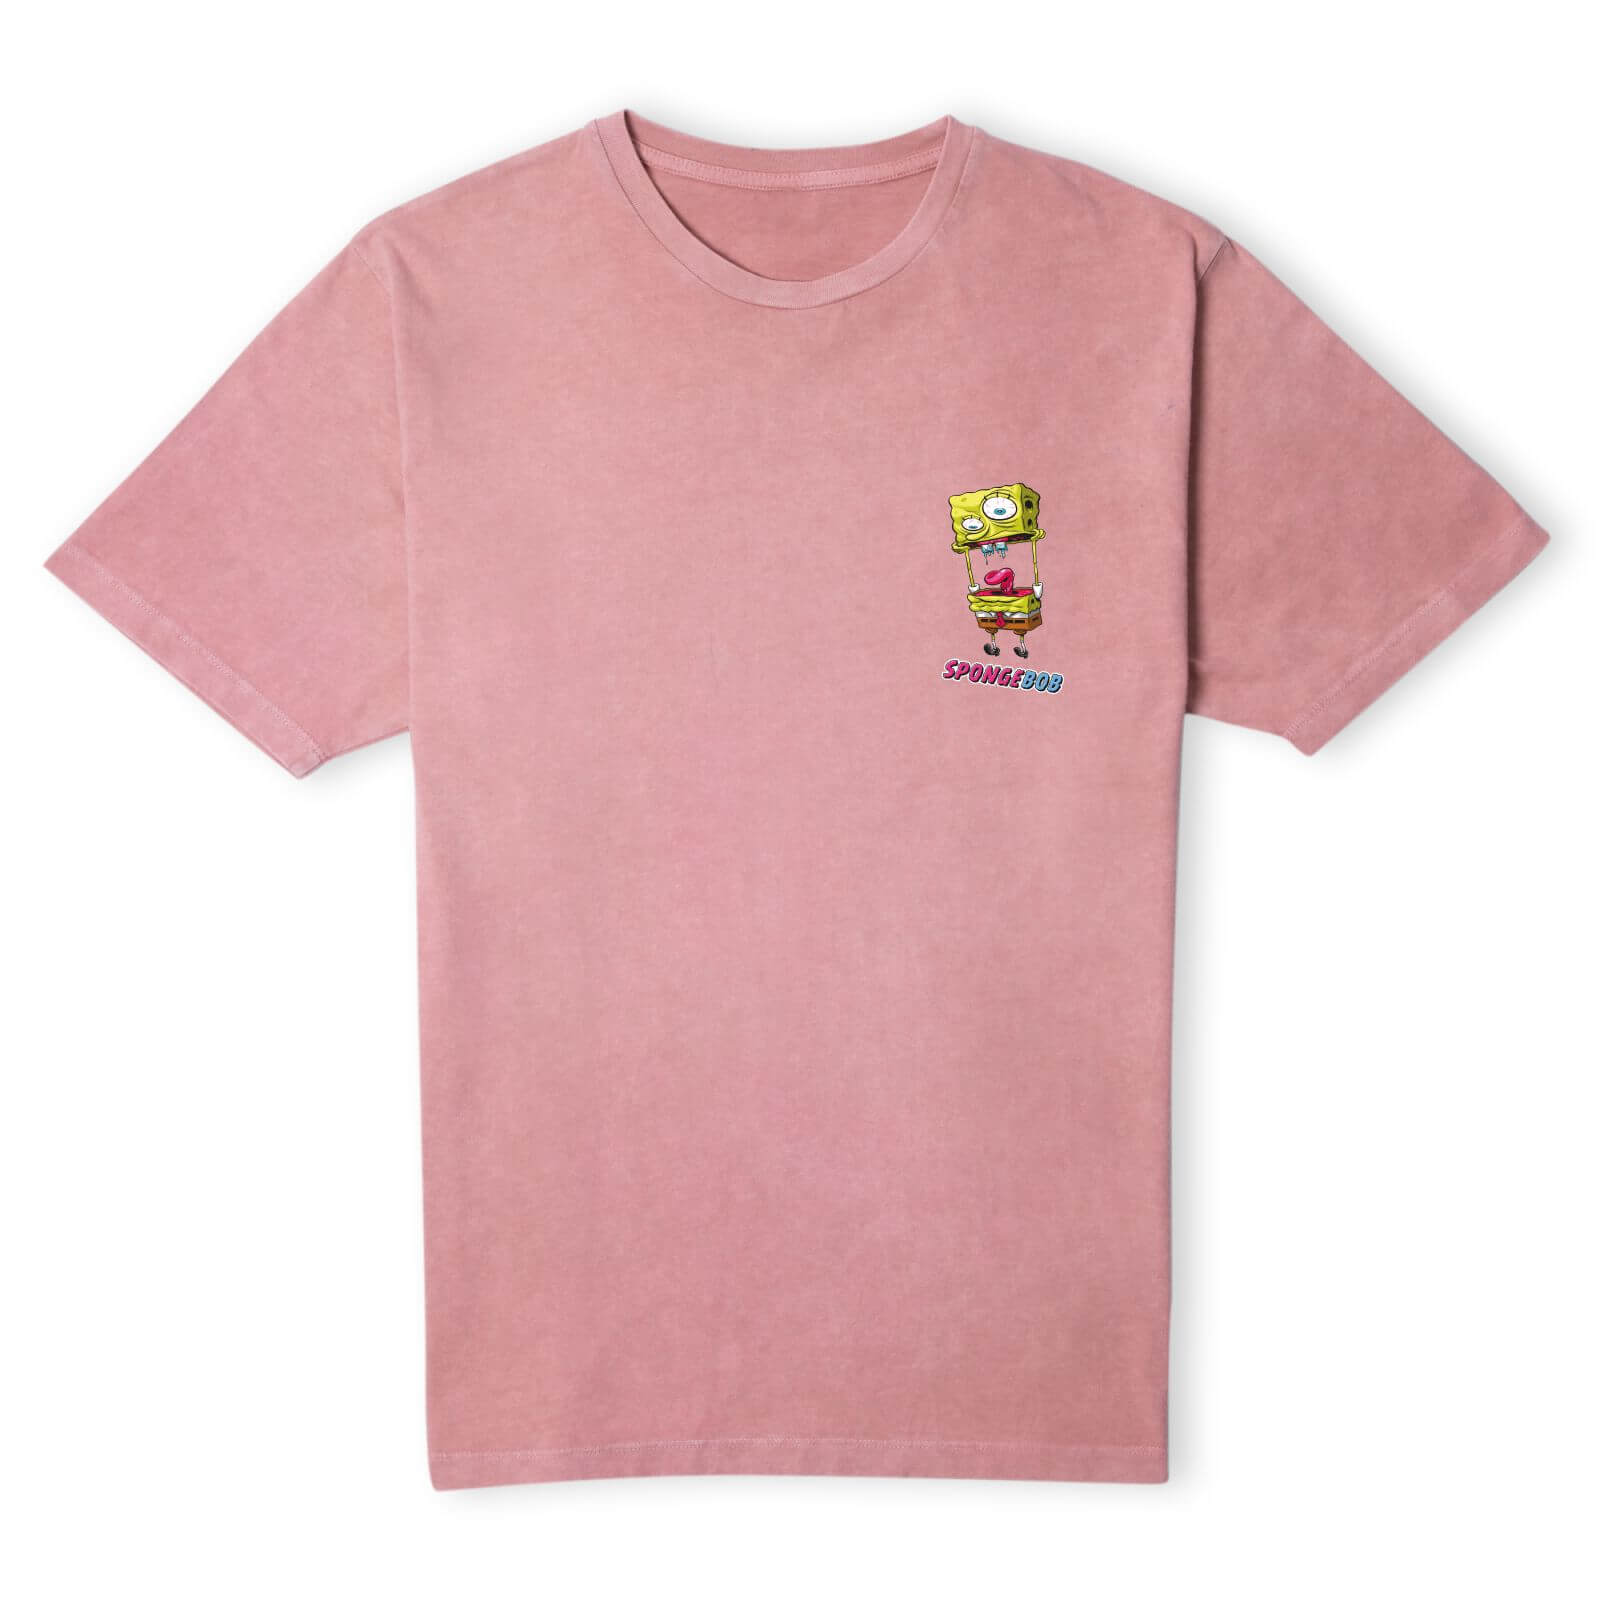 Spongebob Squarepants Detached Men's T-Shirt - Pink Acid Wash - XS - Pink Acid Wash